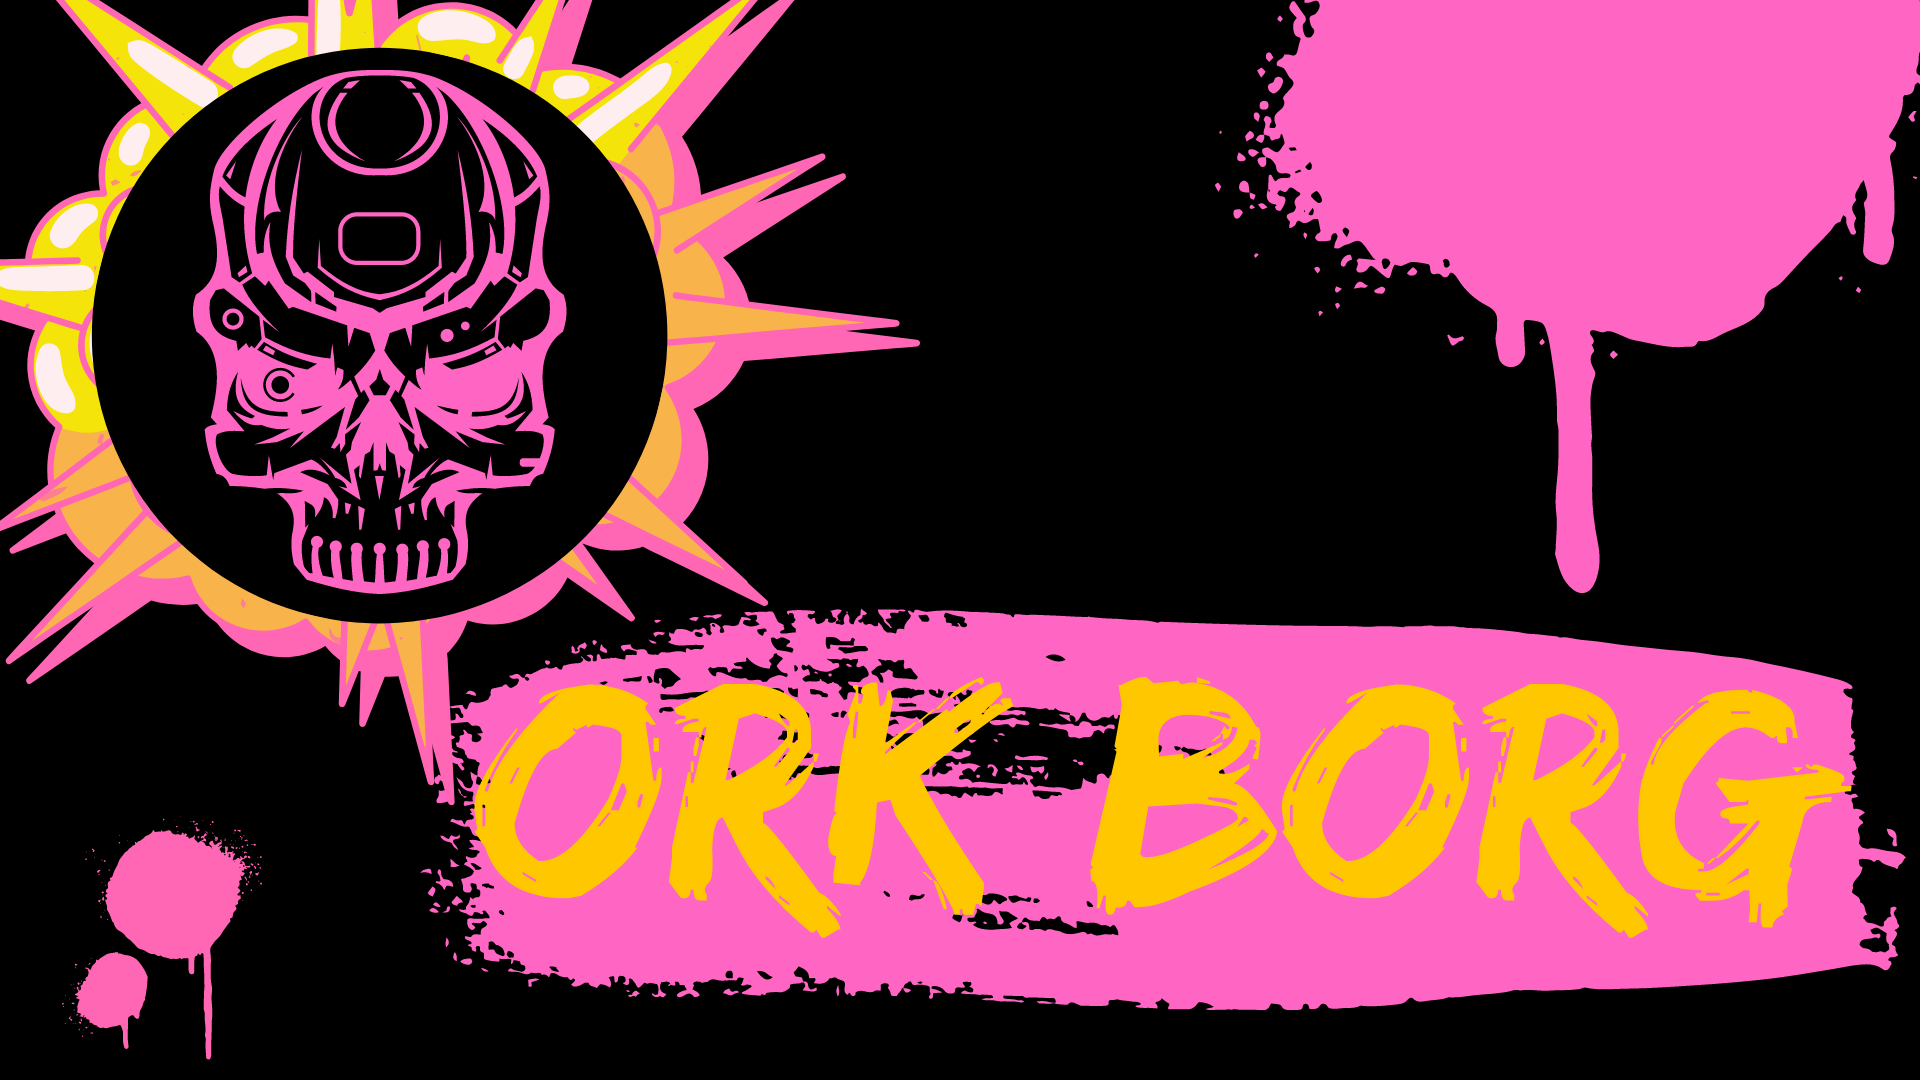 Ork Borg Oneshot